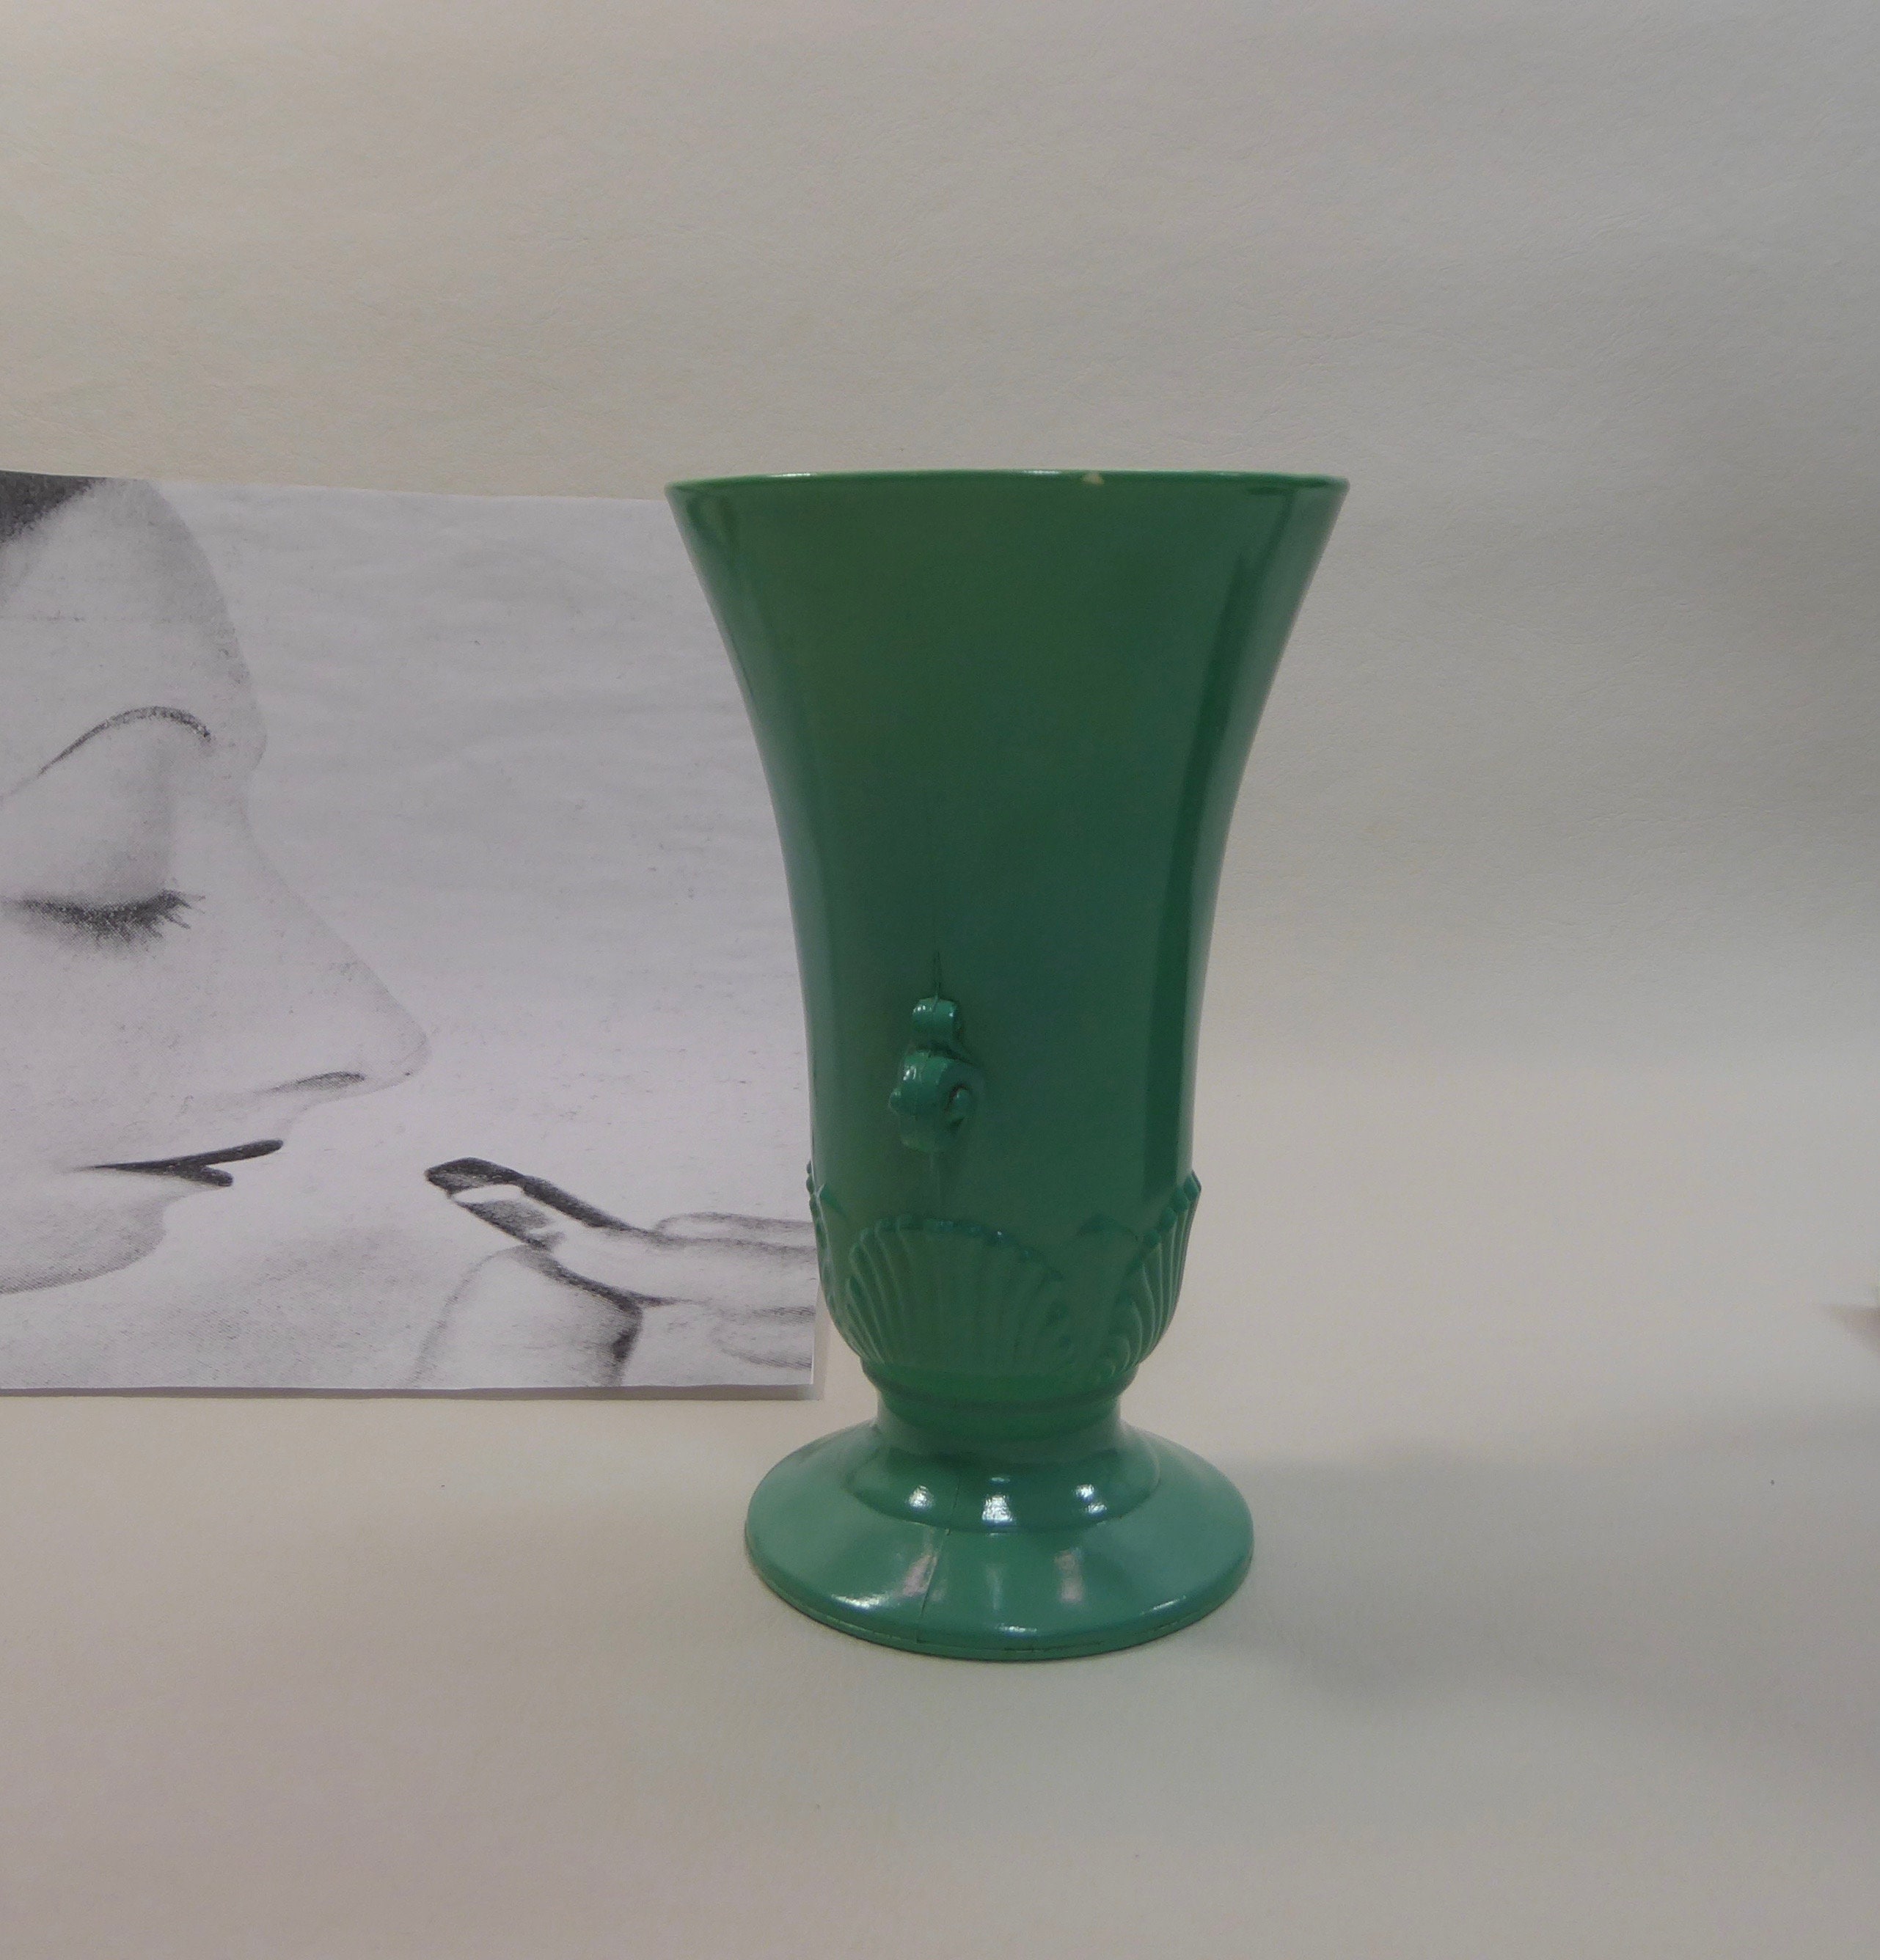 Mint Green Art Deco Vase Pressed Glass Depression Glass Late 1930 Flower Vase Decorative